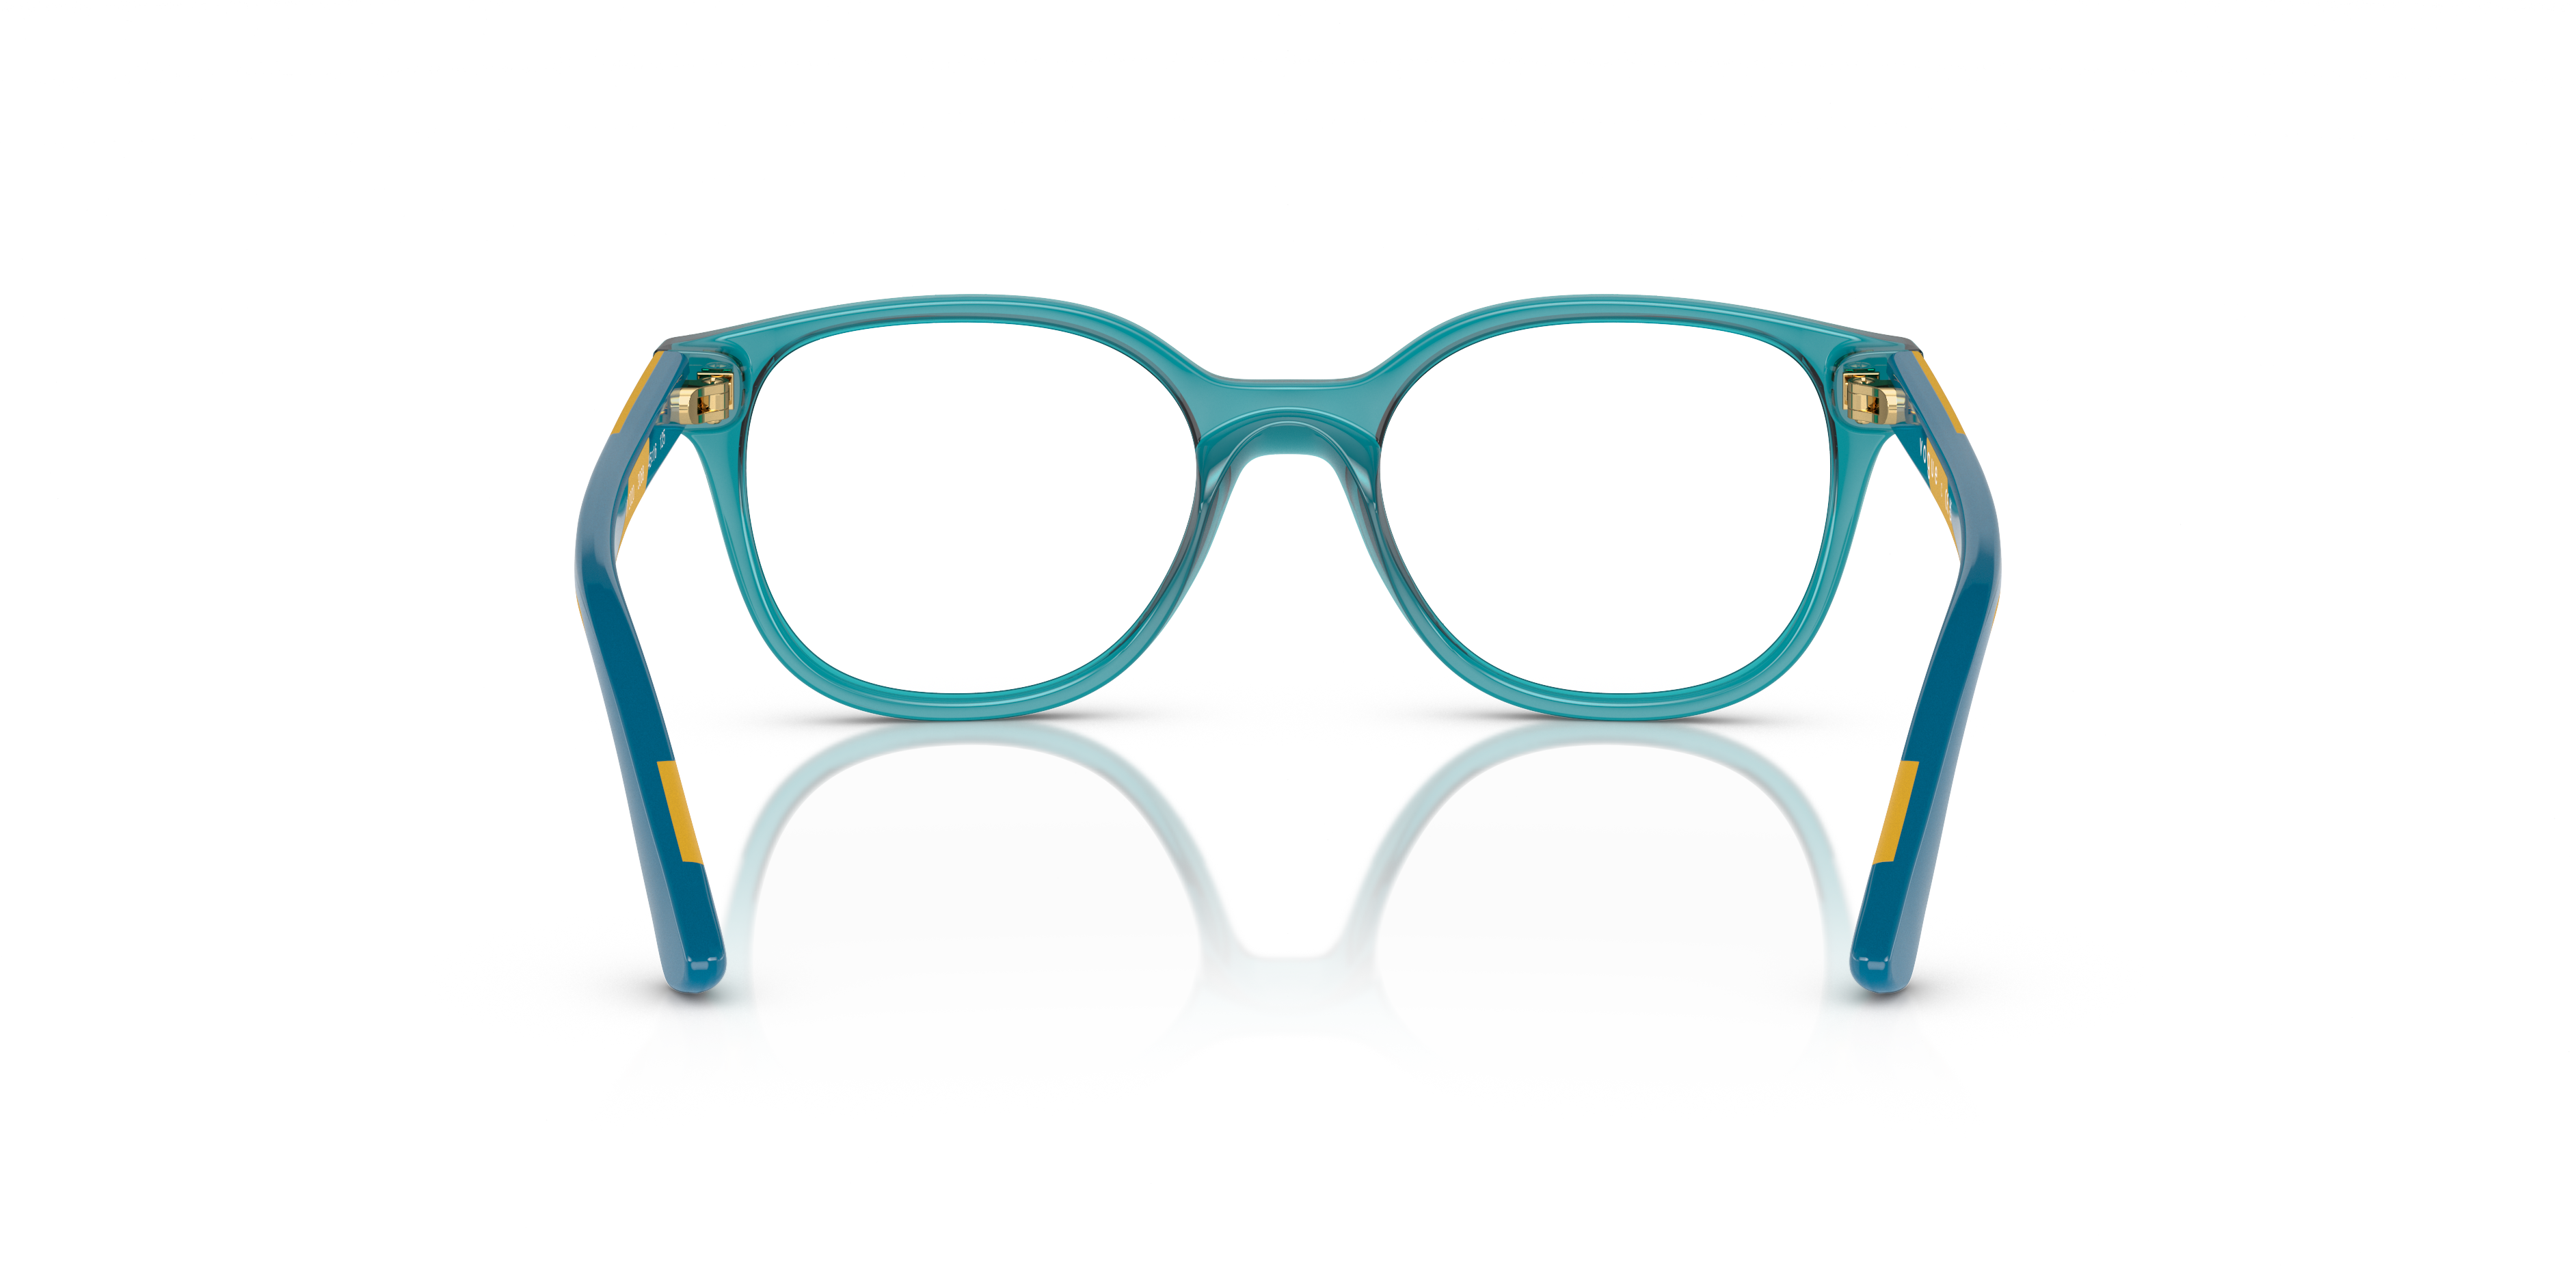 Detail02 Vogue VY 2020 Children's Glasses Transparent / Transparent, Blue